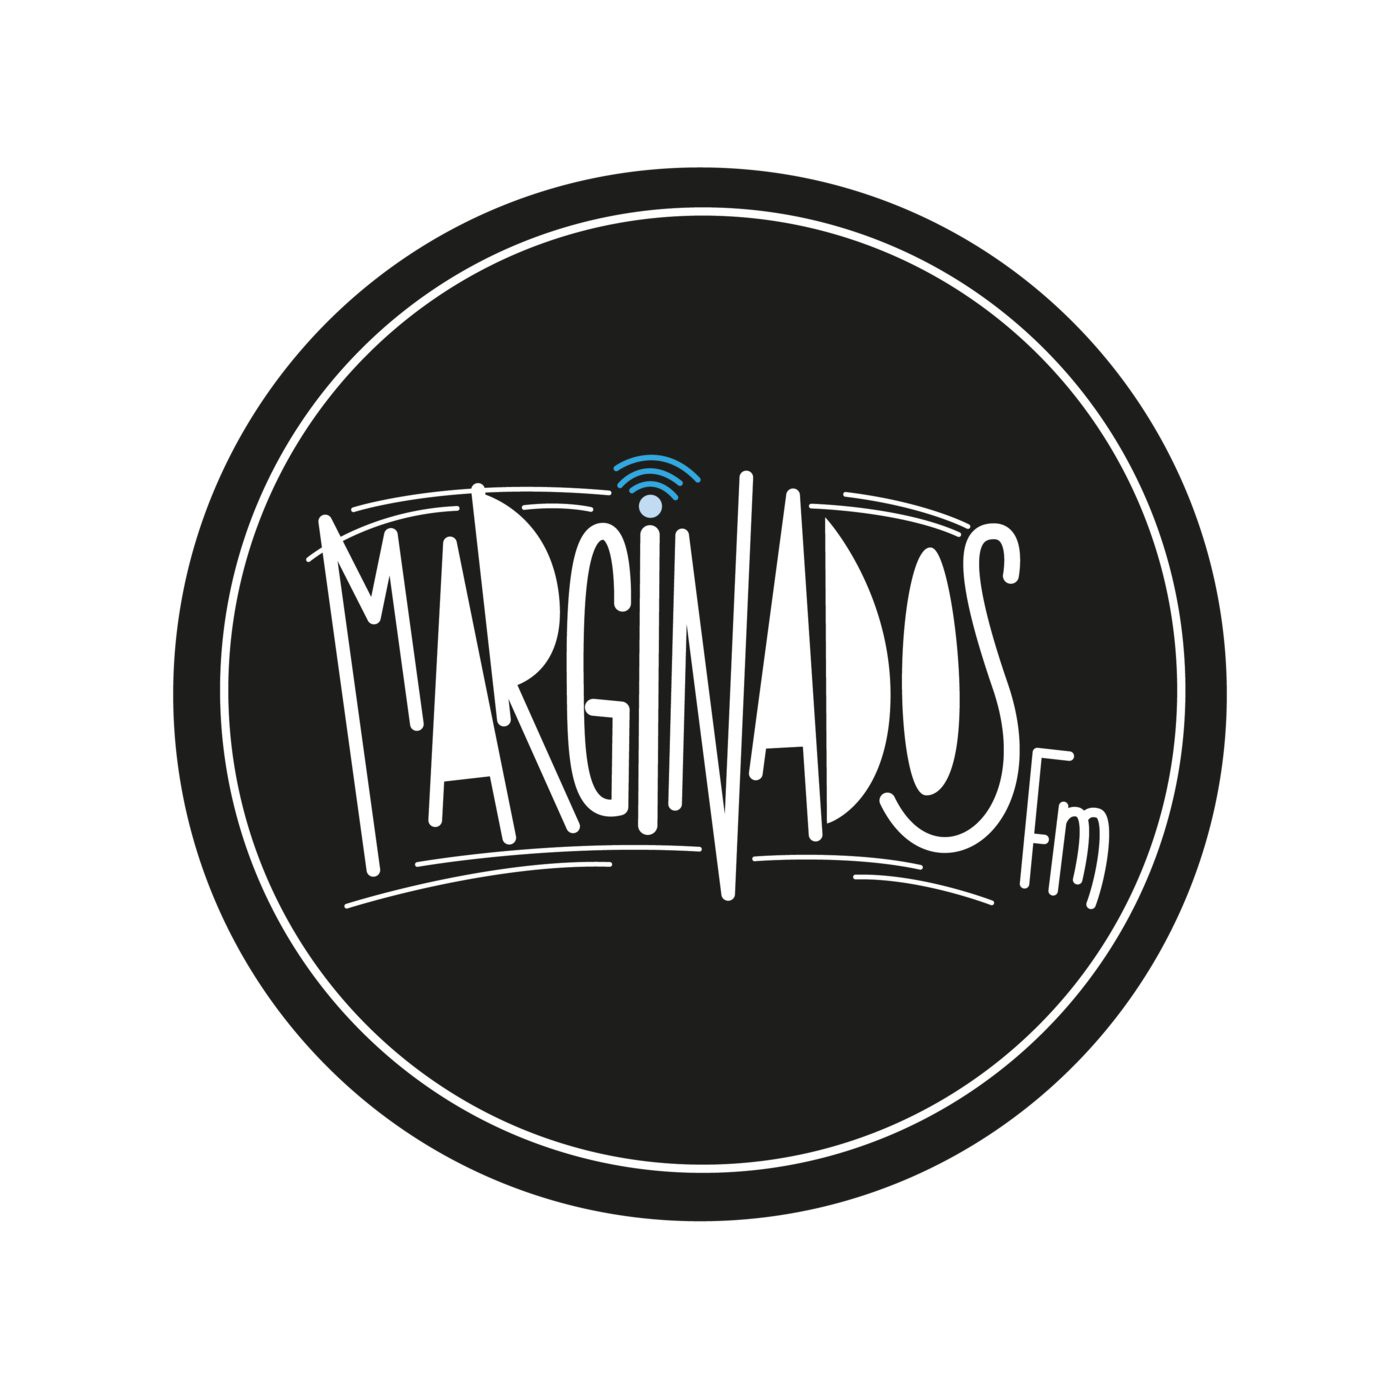 Marginados fm 08-07-14